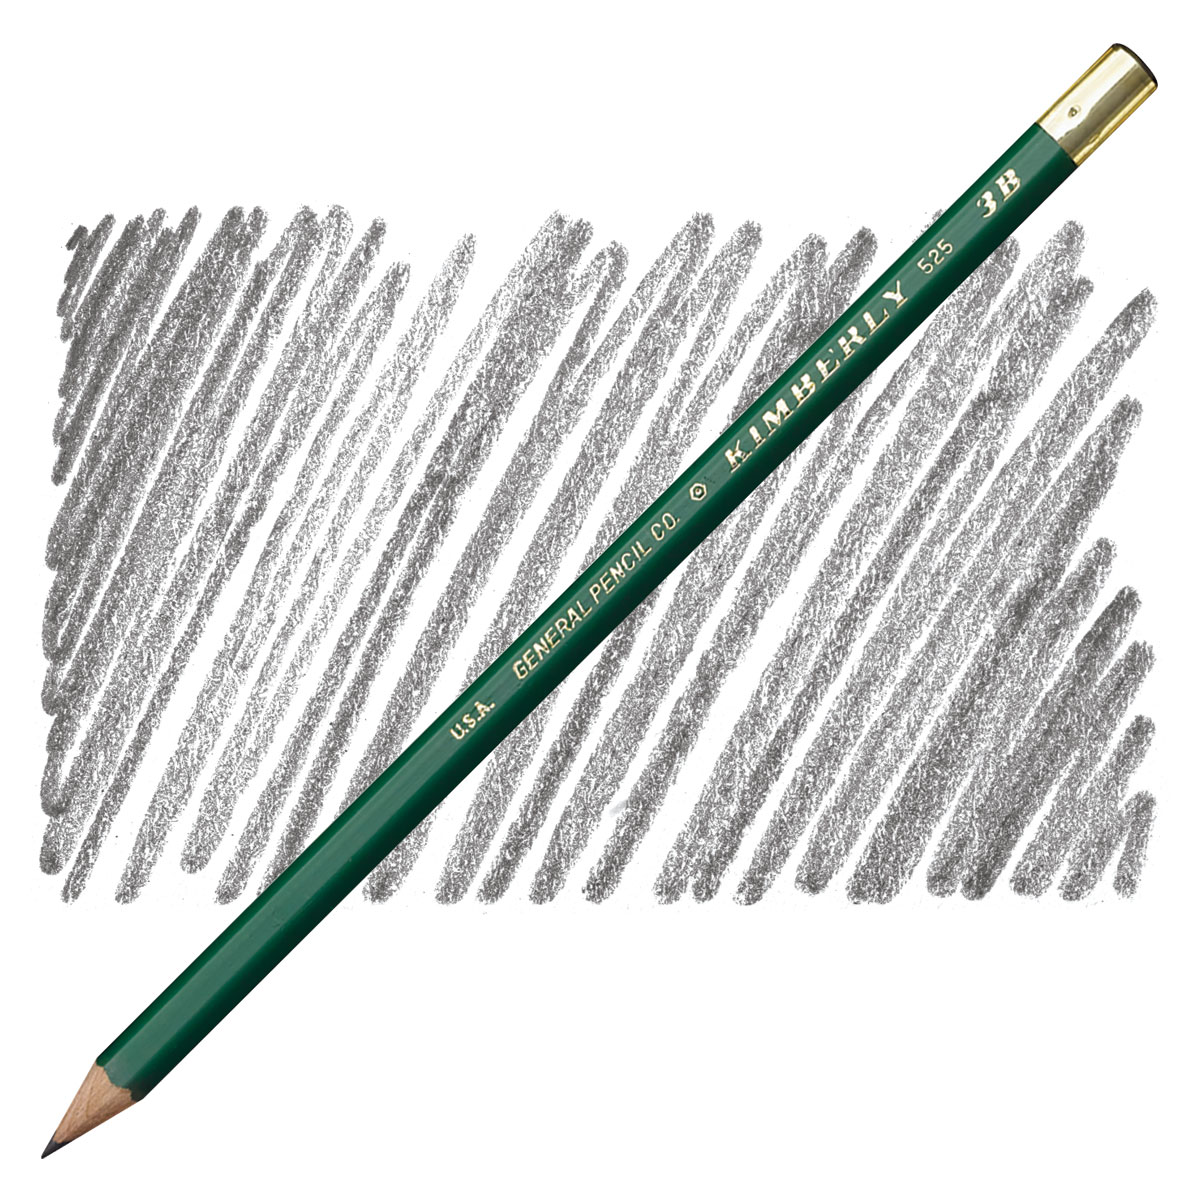 General's Kimberly Graphite Art Pencil Kit